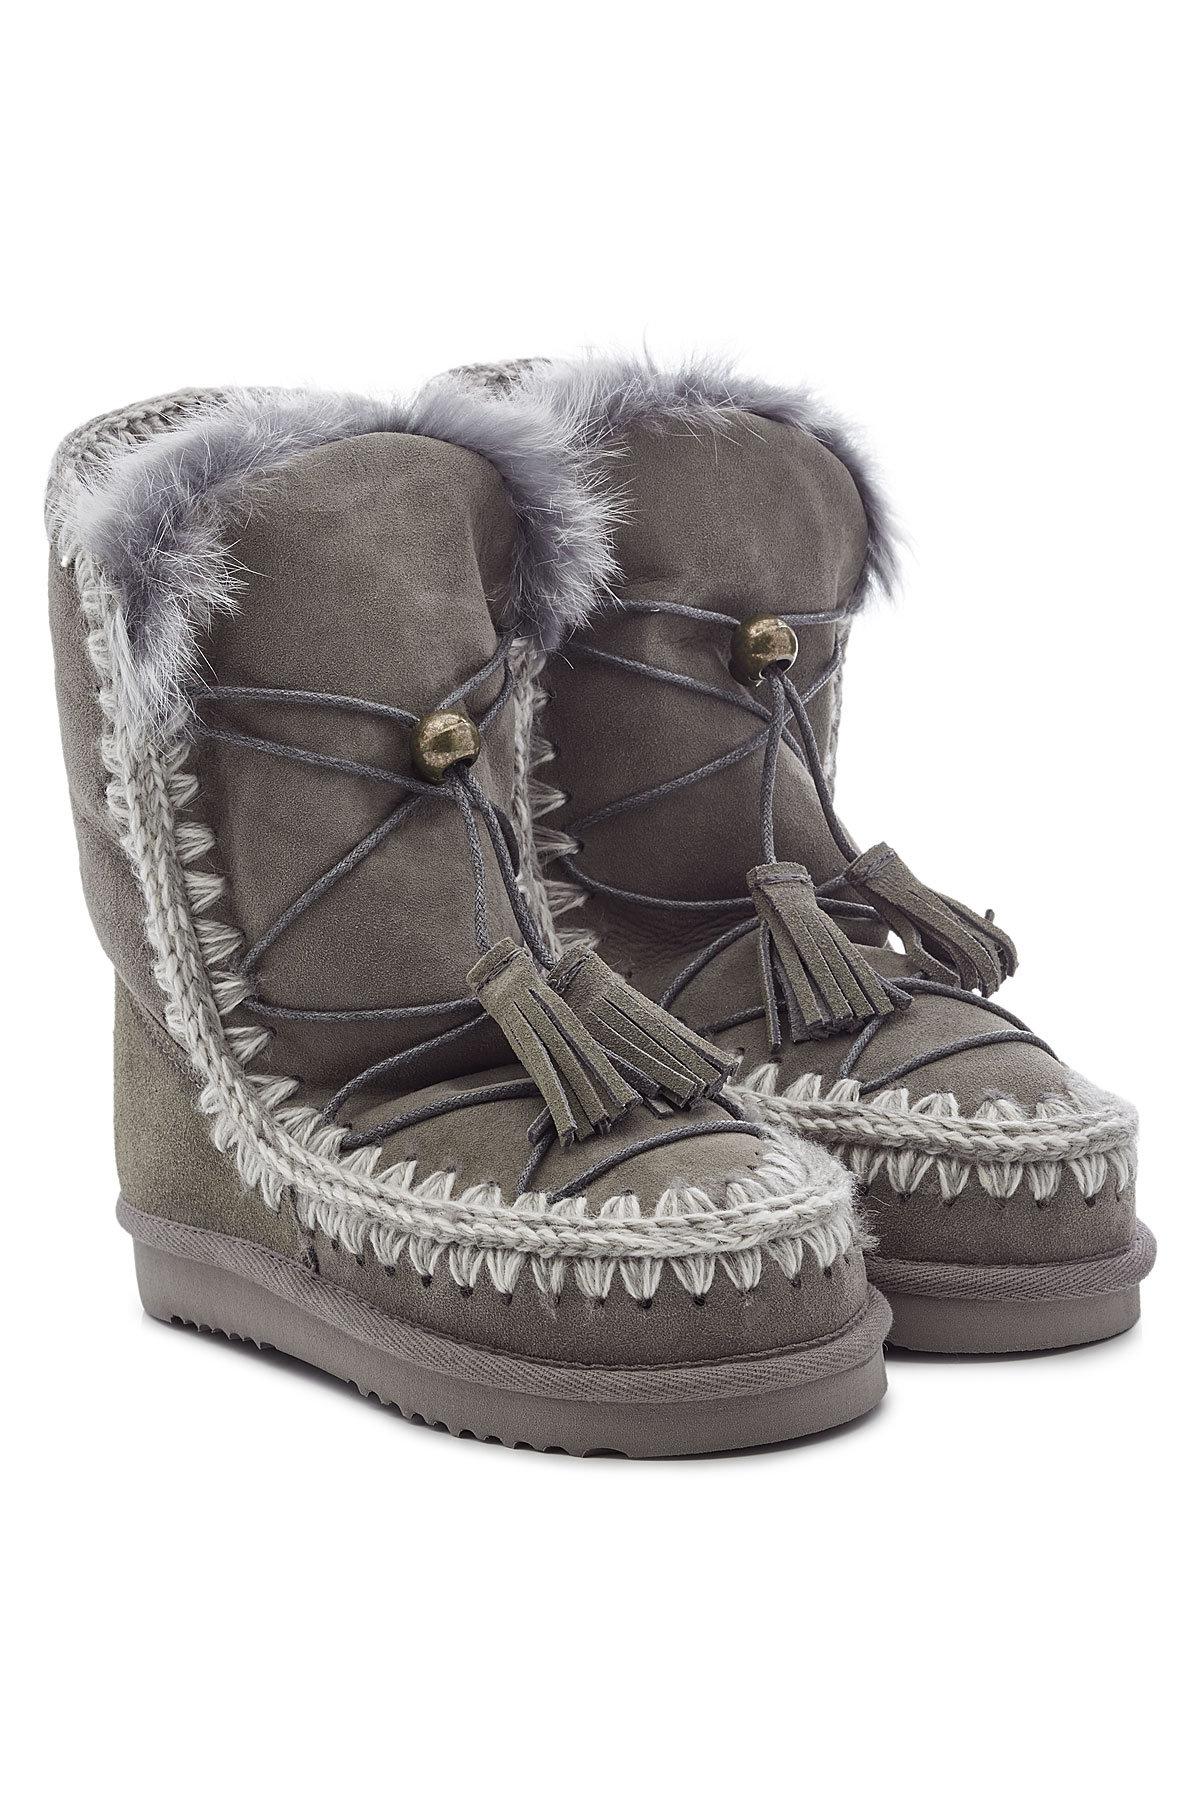 mou eskimo boots sale